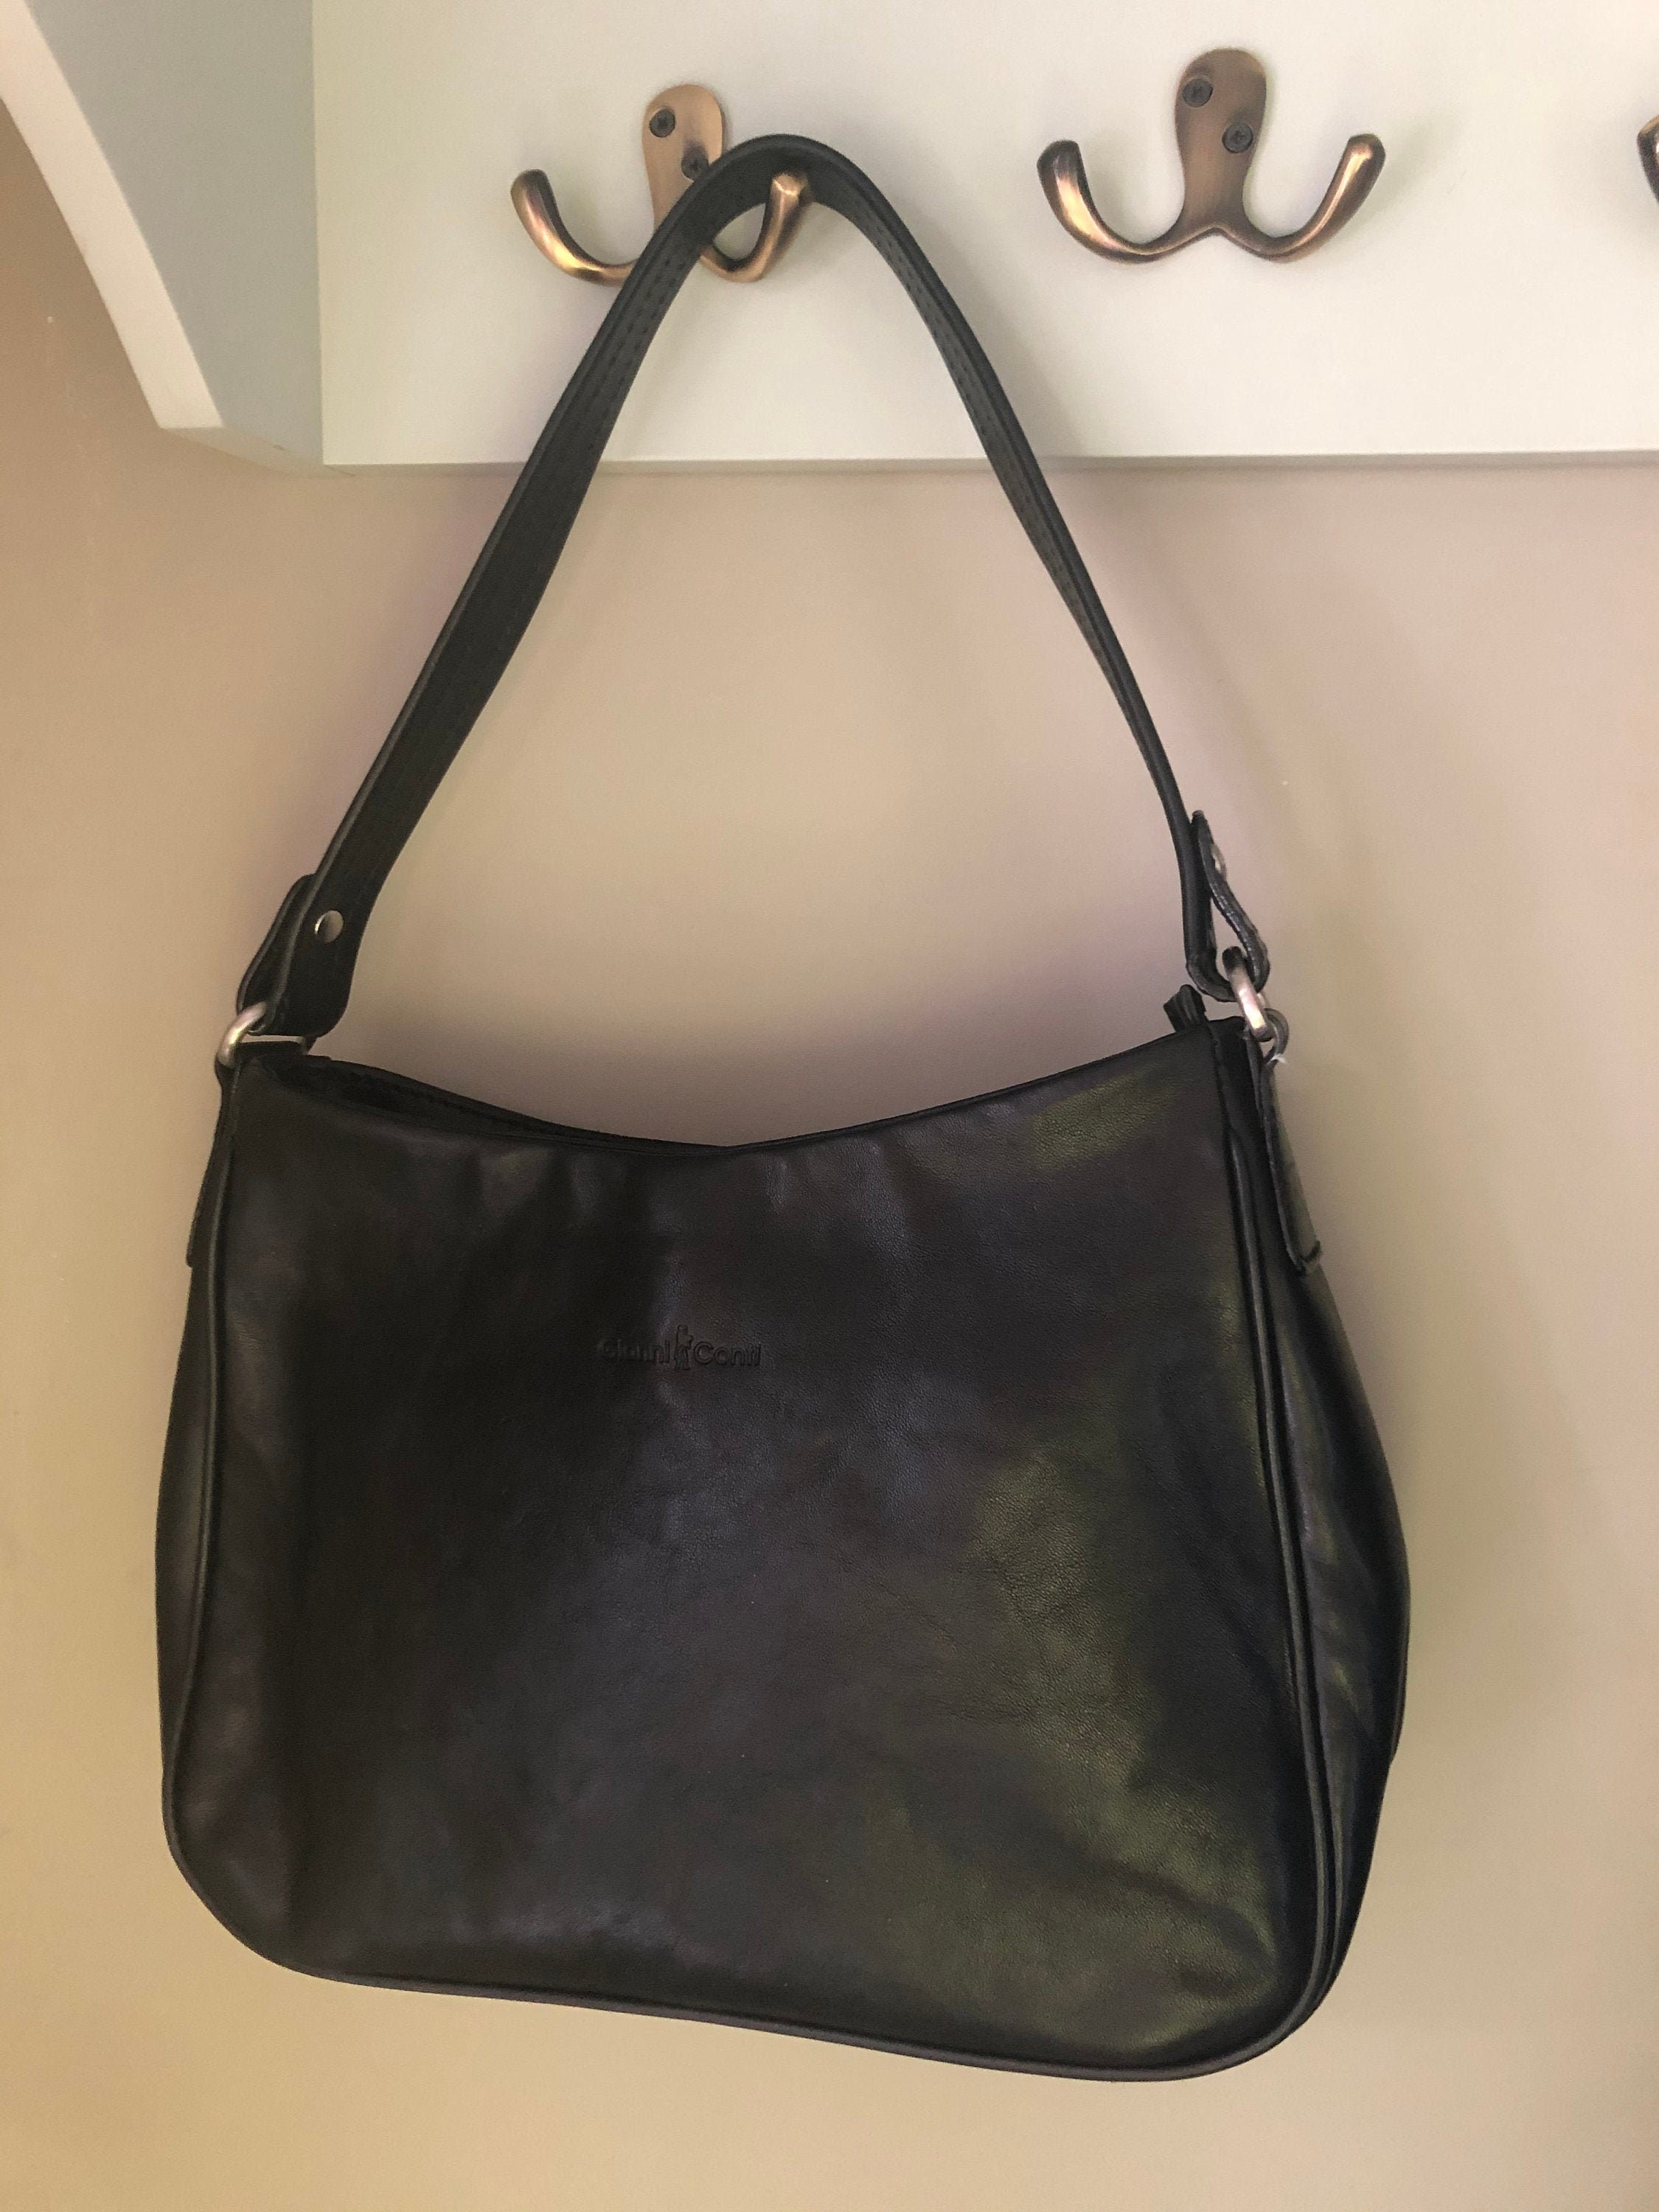 Vintage Retro Y2K 1990s Louis Cardy Baguette Style Small Beige Leather Purse Evening Lady Bag Handbag